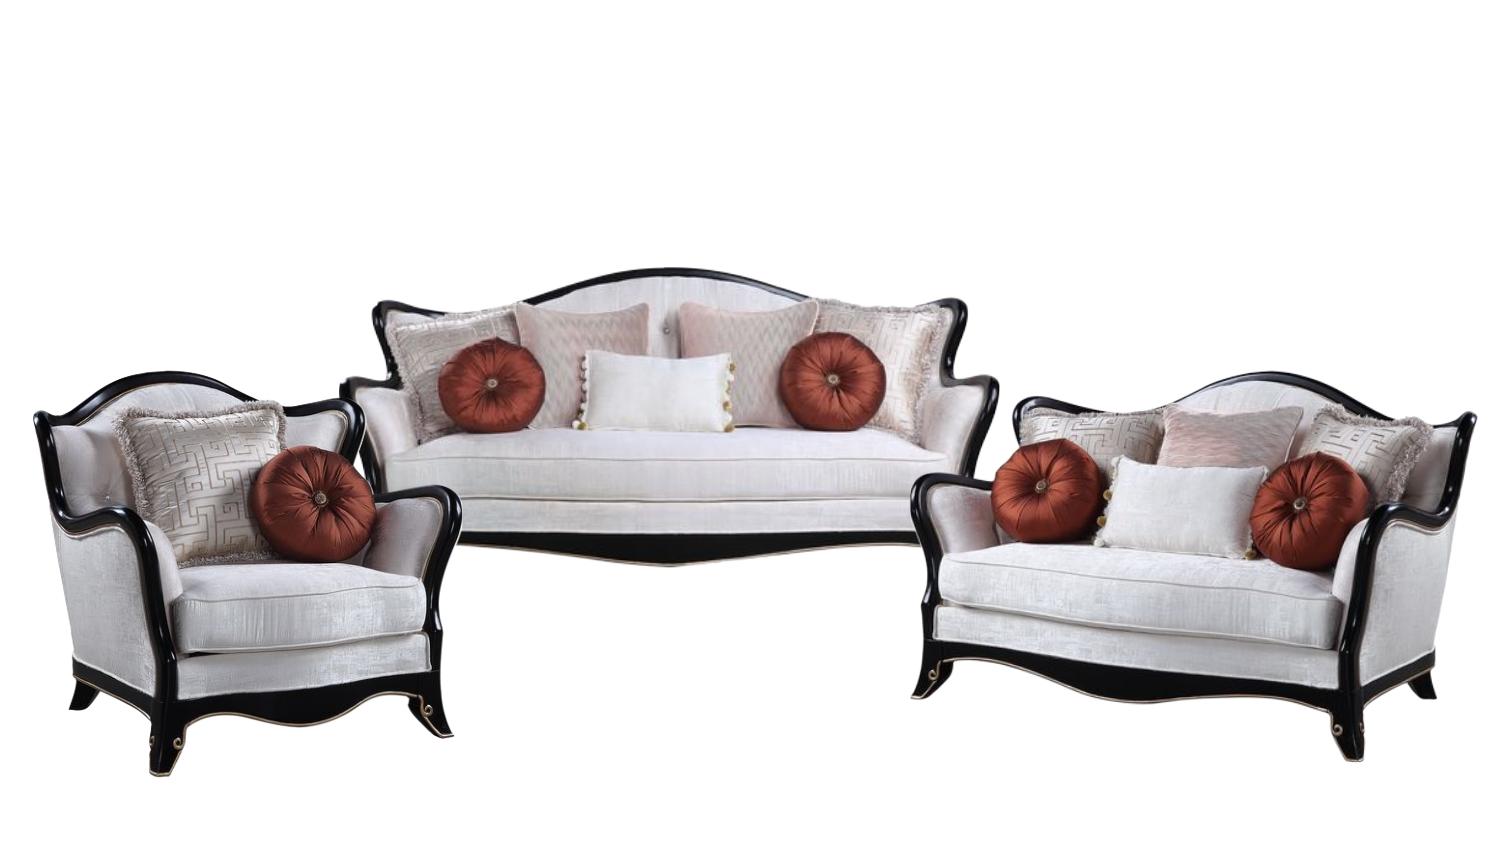 Classic Sofa Loveseat and Chair Set Nurmive LV00251-3pcs in Beige Fabric